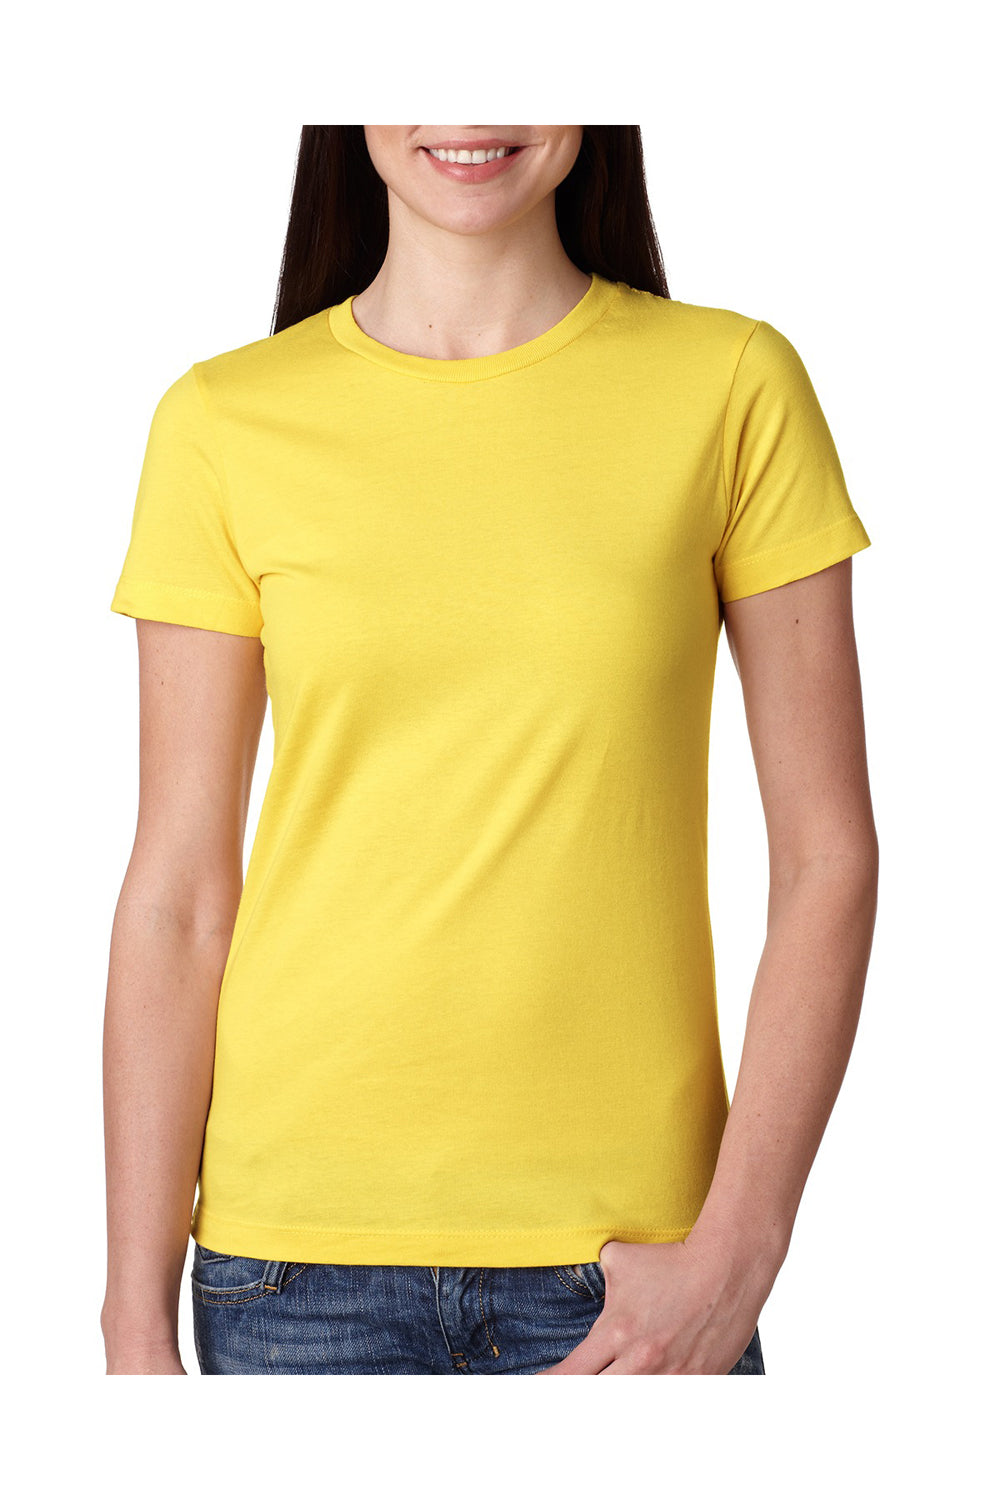 Next Level N3900 Womens Boyfriend Fine Jersey Short Sleeve Crewneck T-Shirt Vibrant Yellow Front